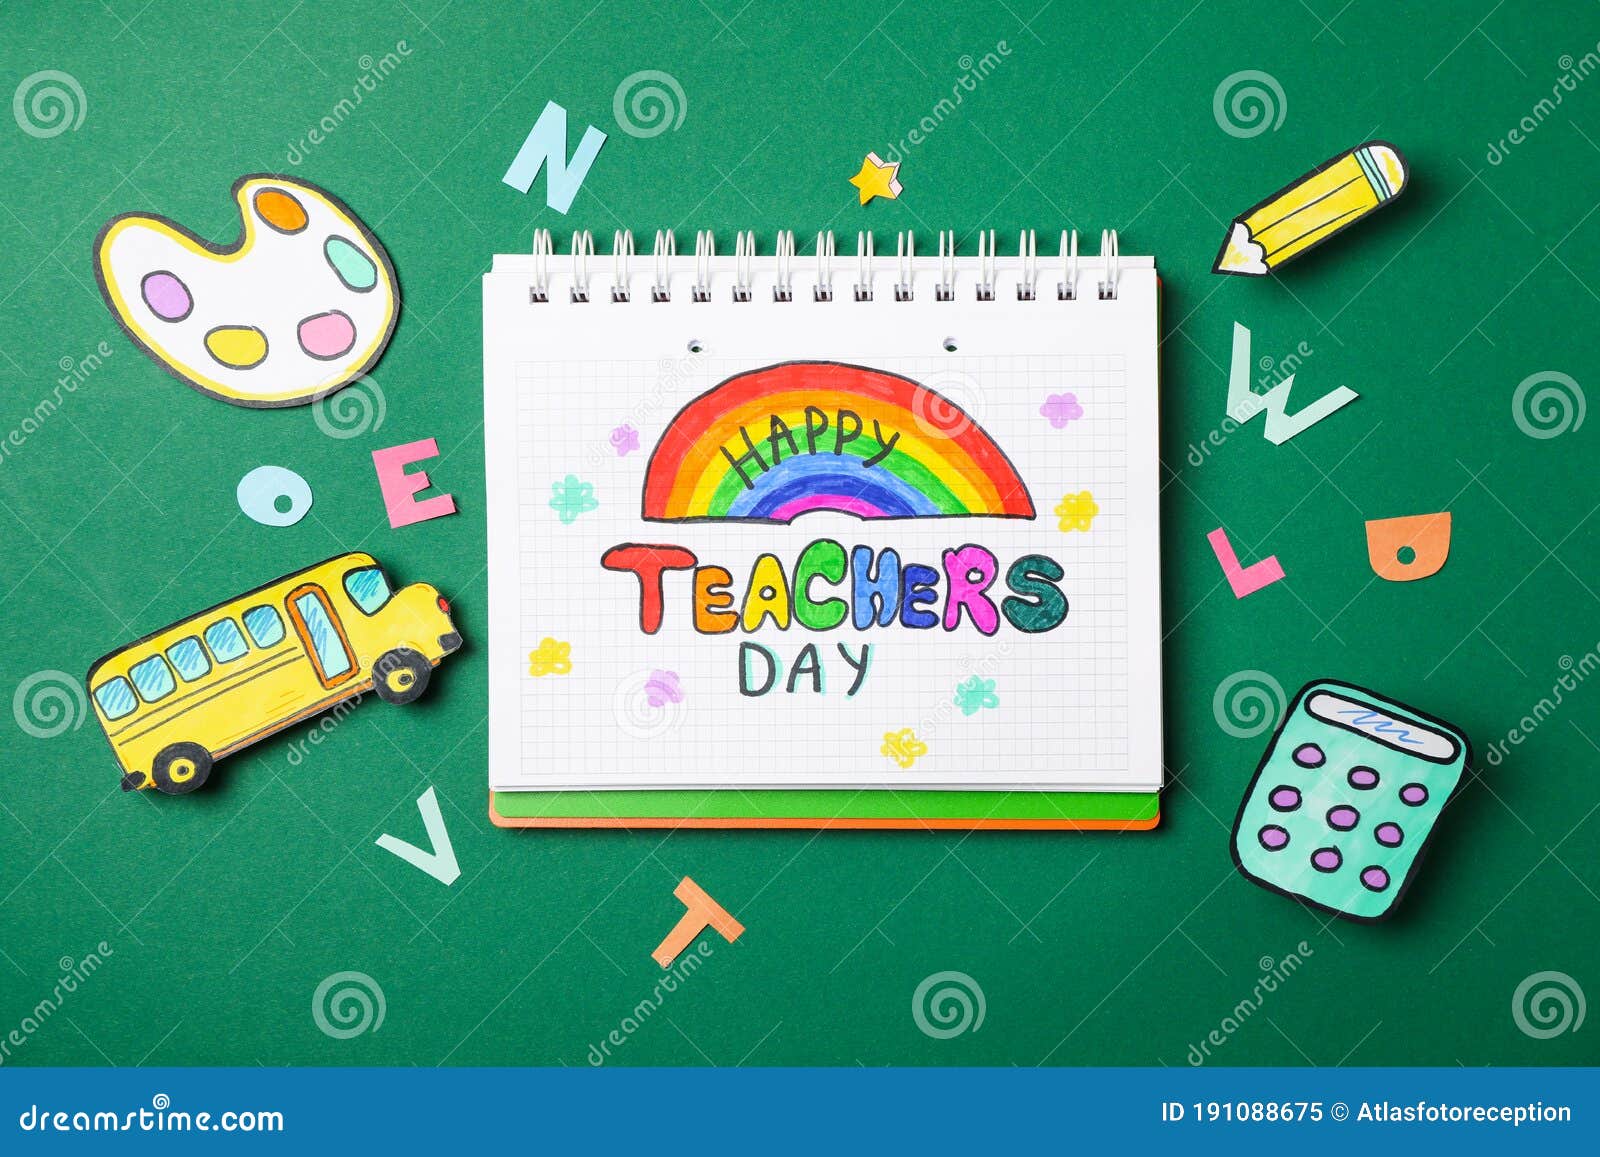 FREE Teachers Day Background  Image Download in Word Google Docs PDF  Illustrator Photoshop EPS SVG JPG PNG JPEG  Templatenet